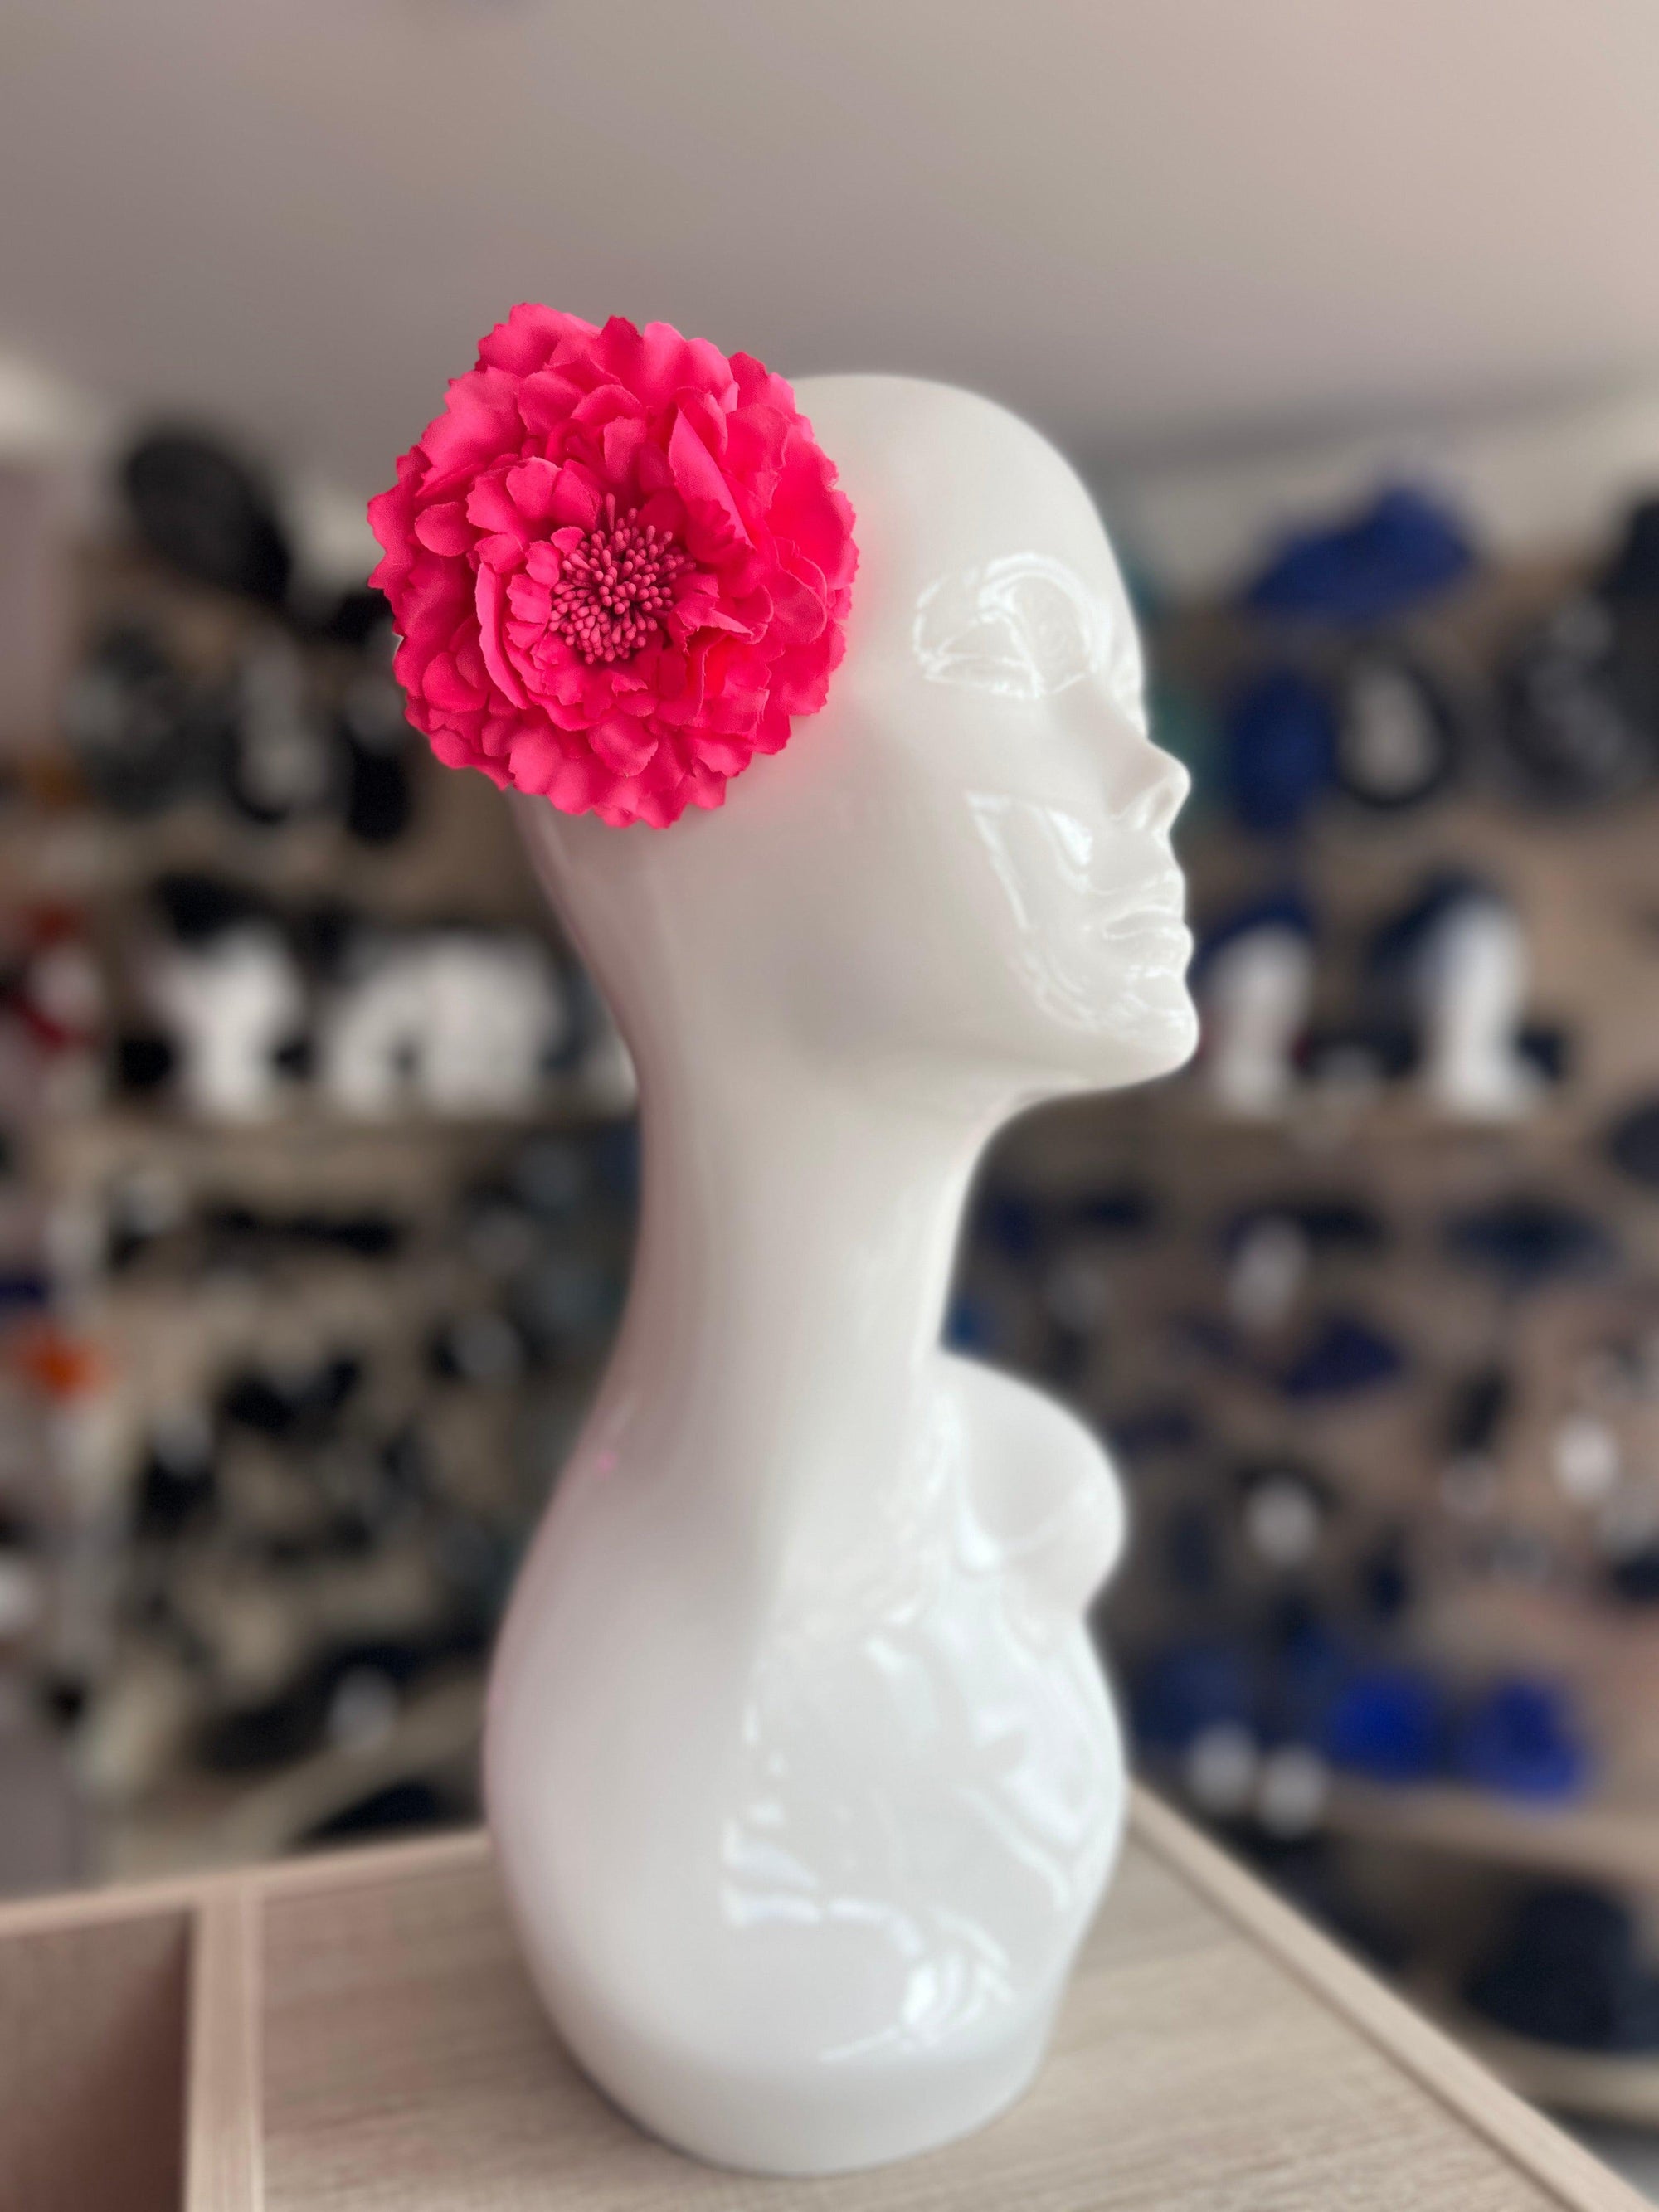 Fuschia Pink Hair Flower Fascinator Clip-Fascinators Direct